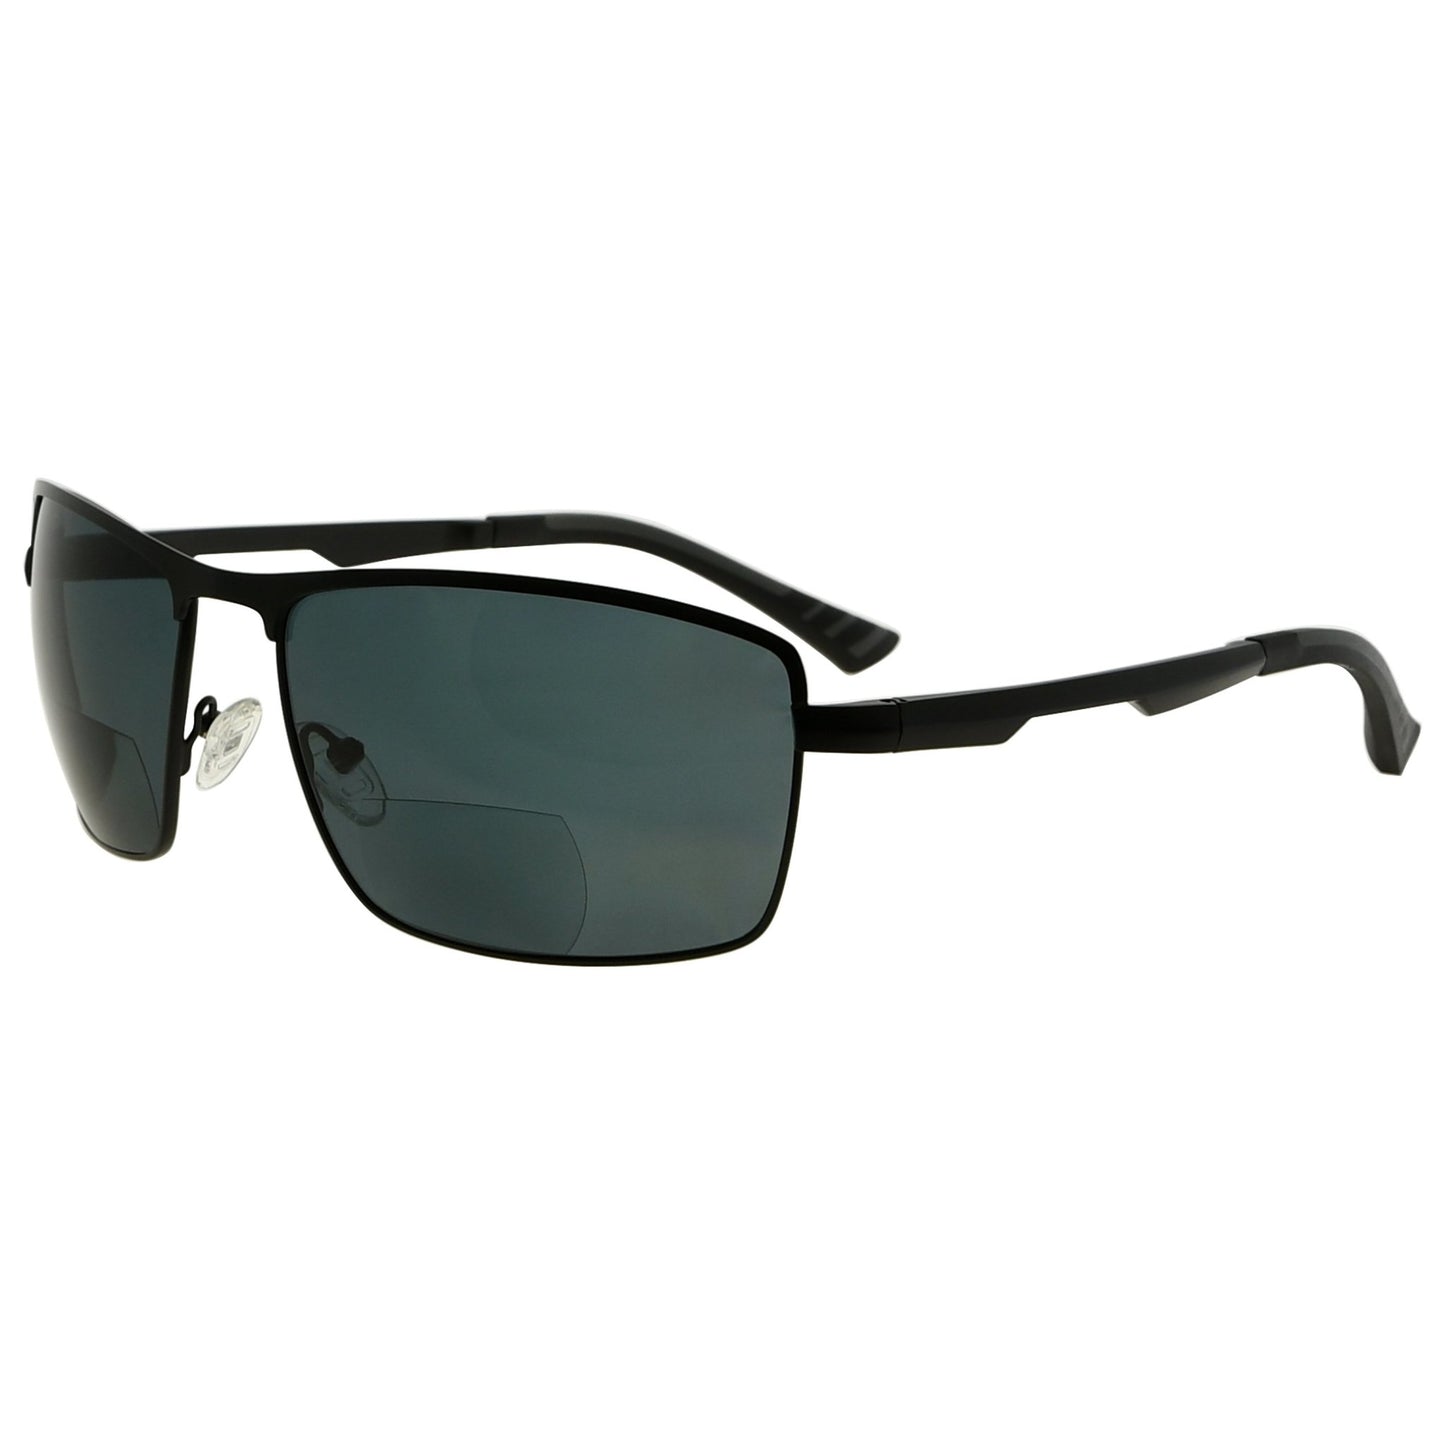 Bifocal Sunglasses Black PGSG802